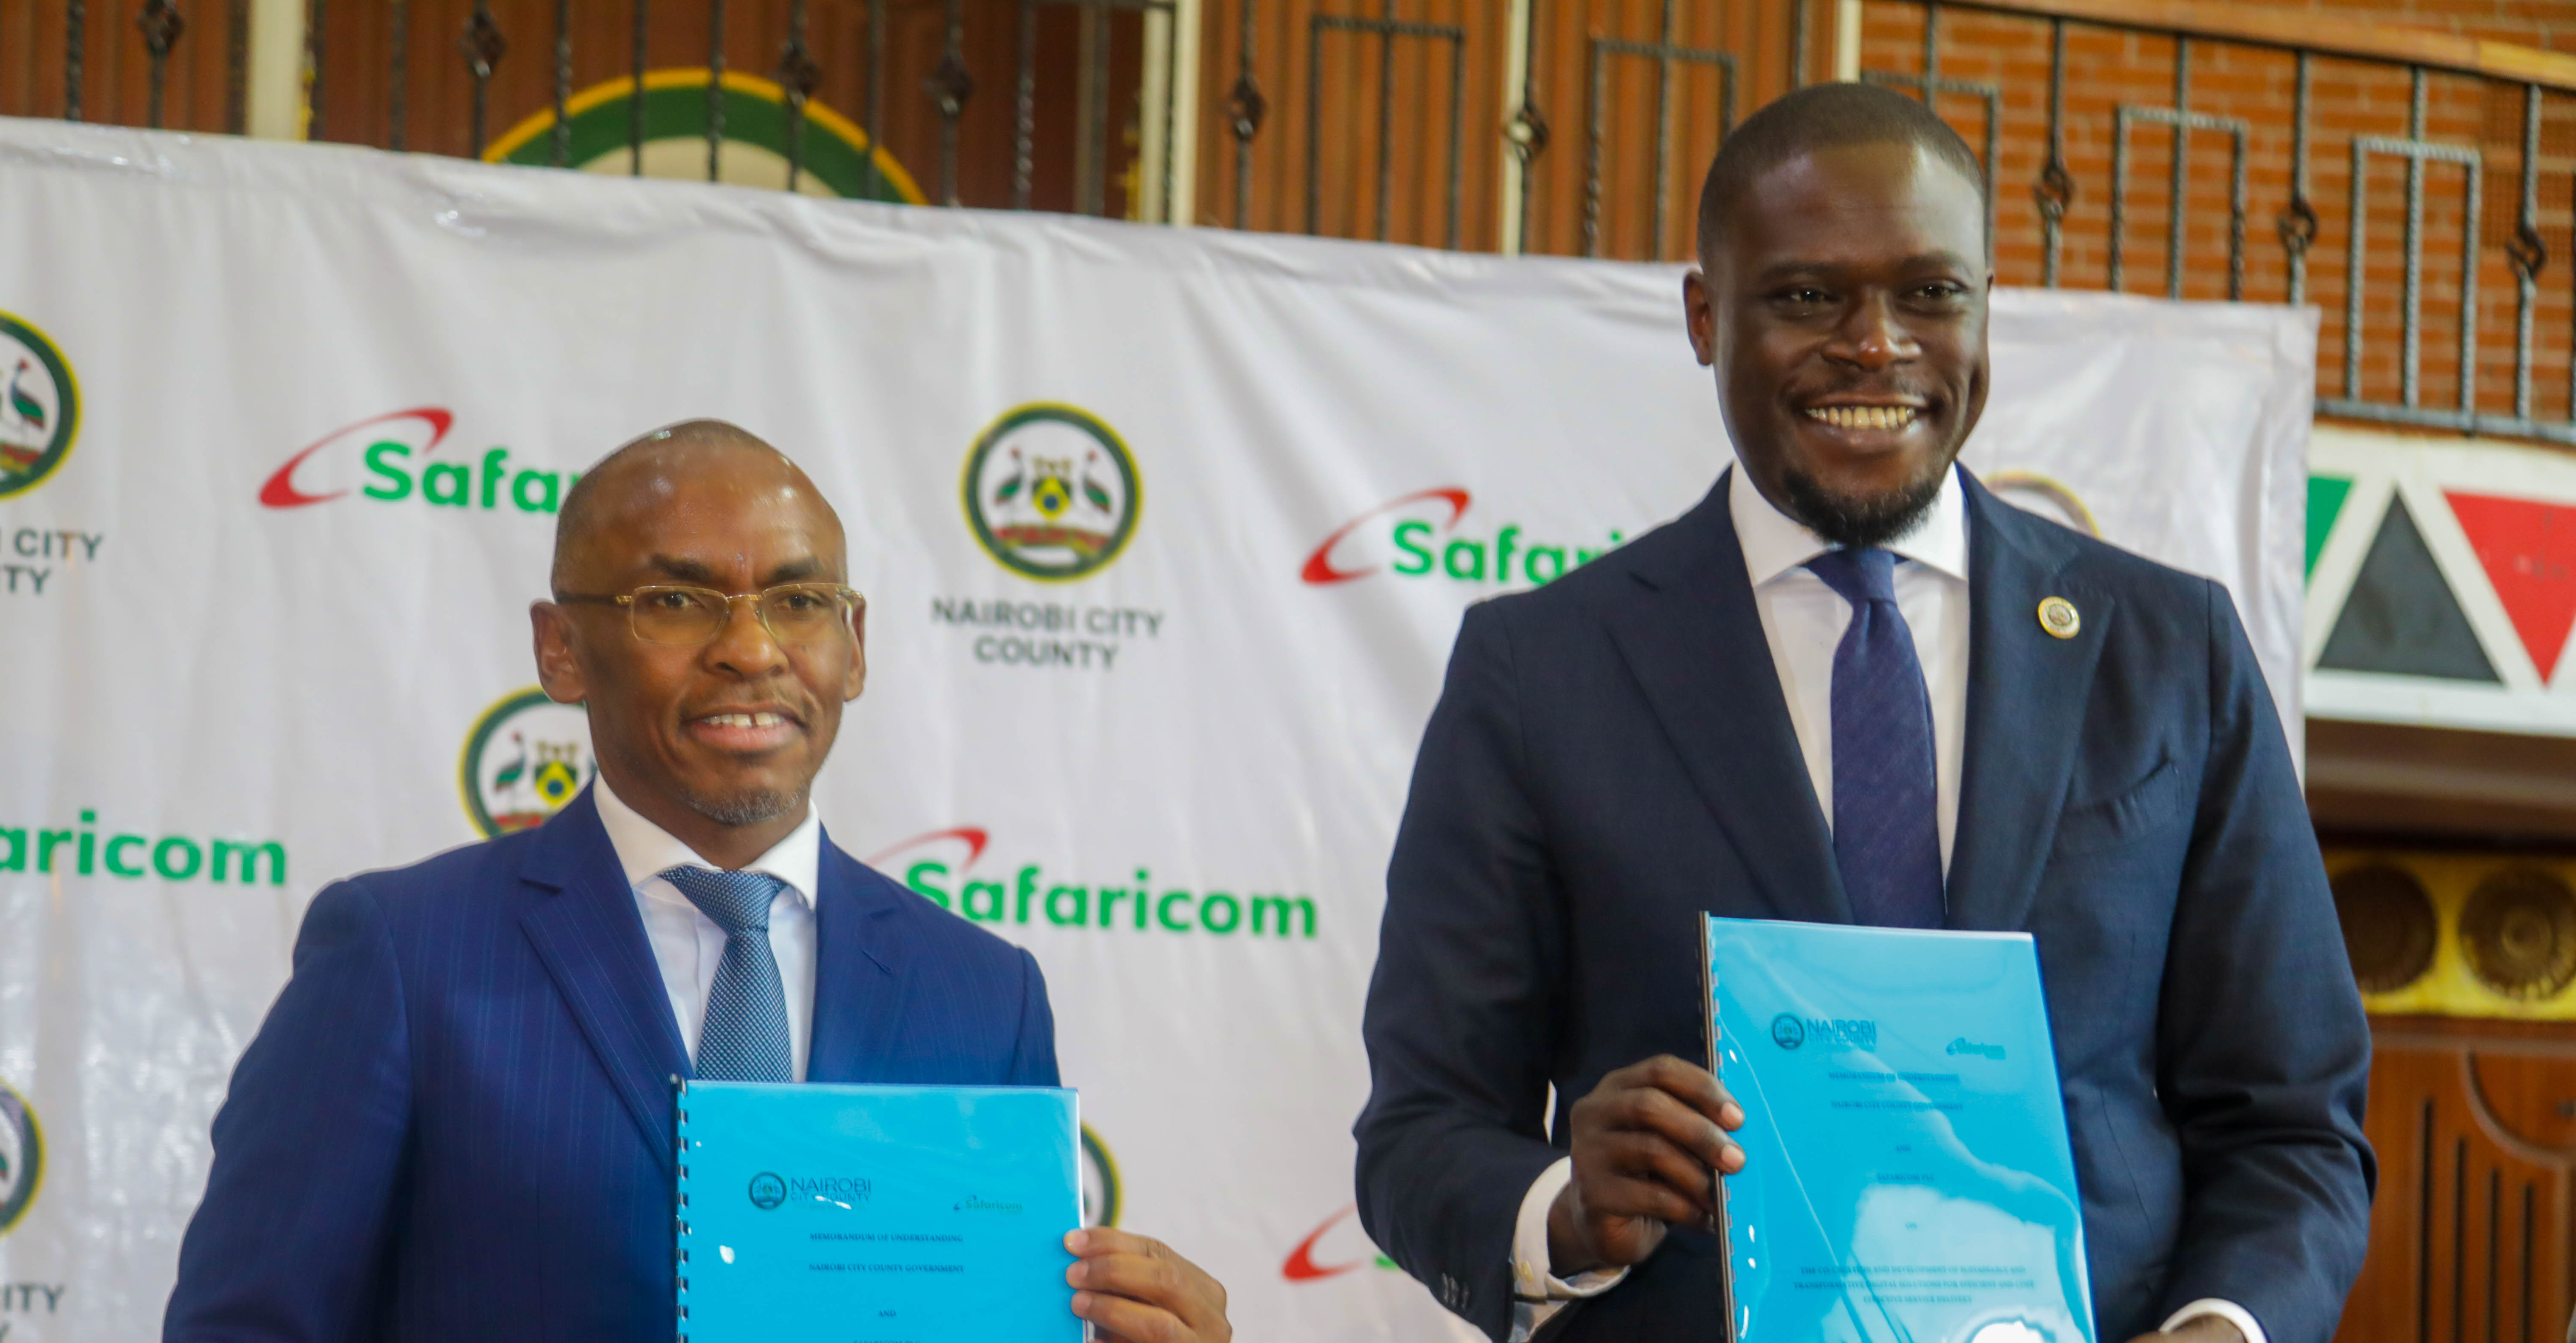 Safaricom To Digitise Nairobi County Services